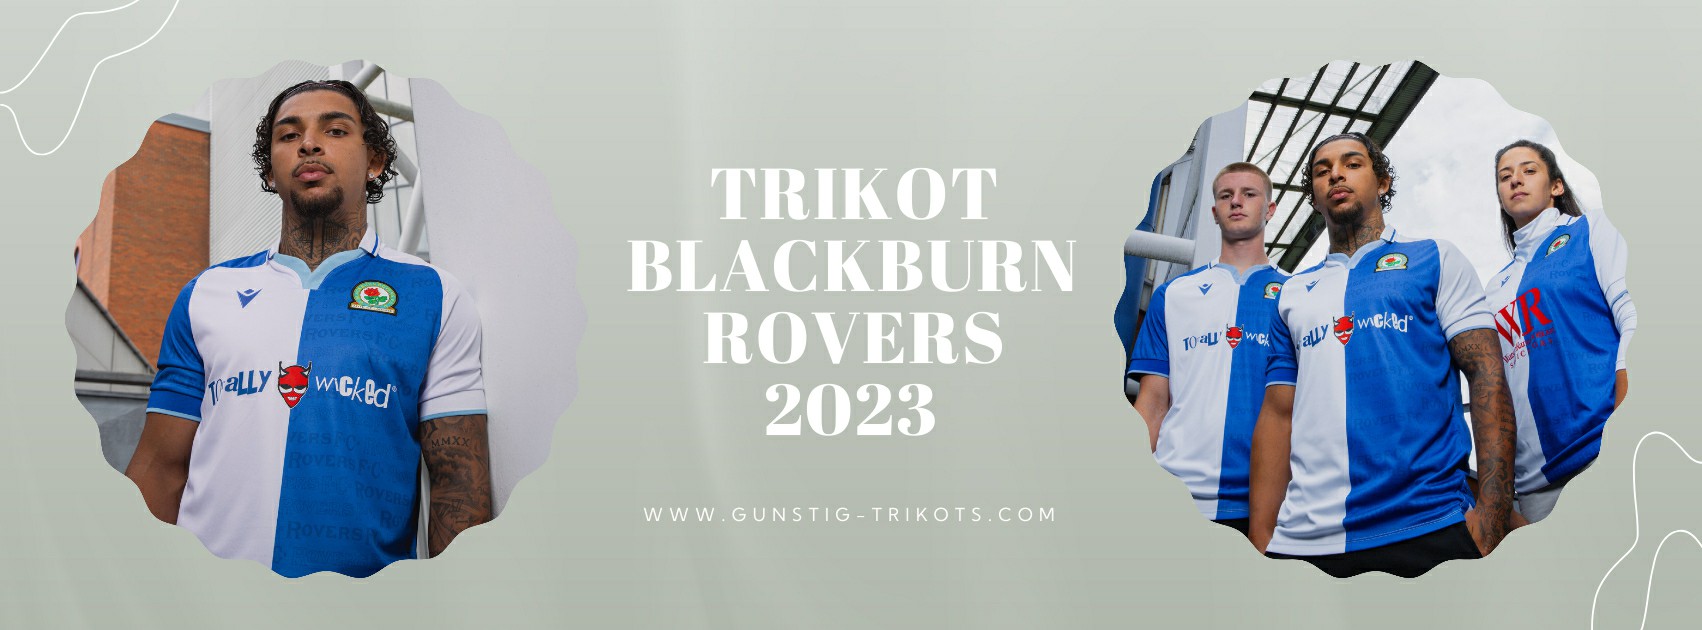 Blackburn Rovers Trikot 2023-2024